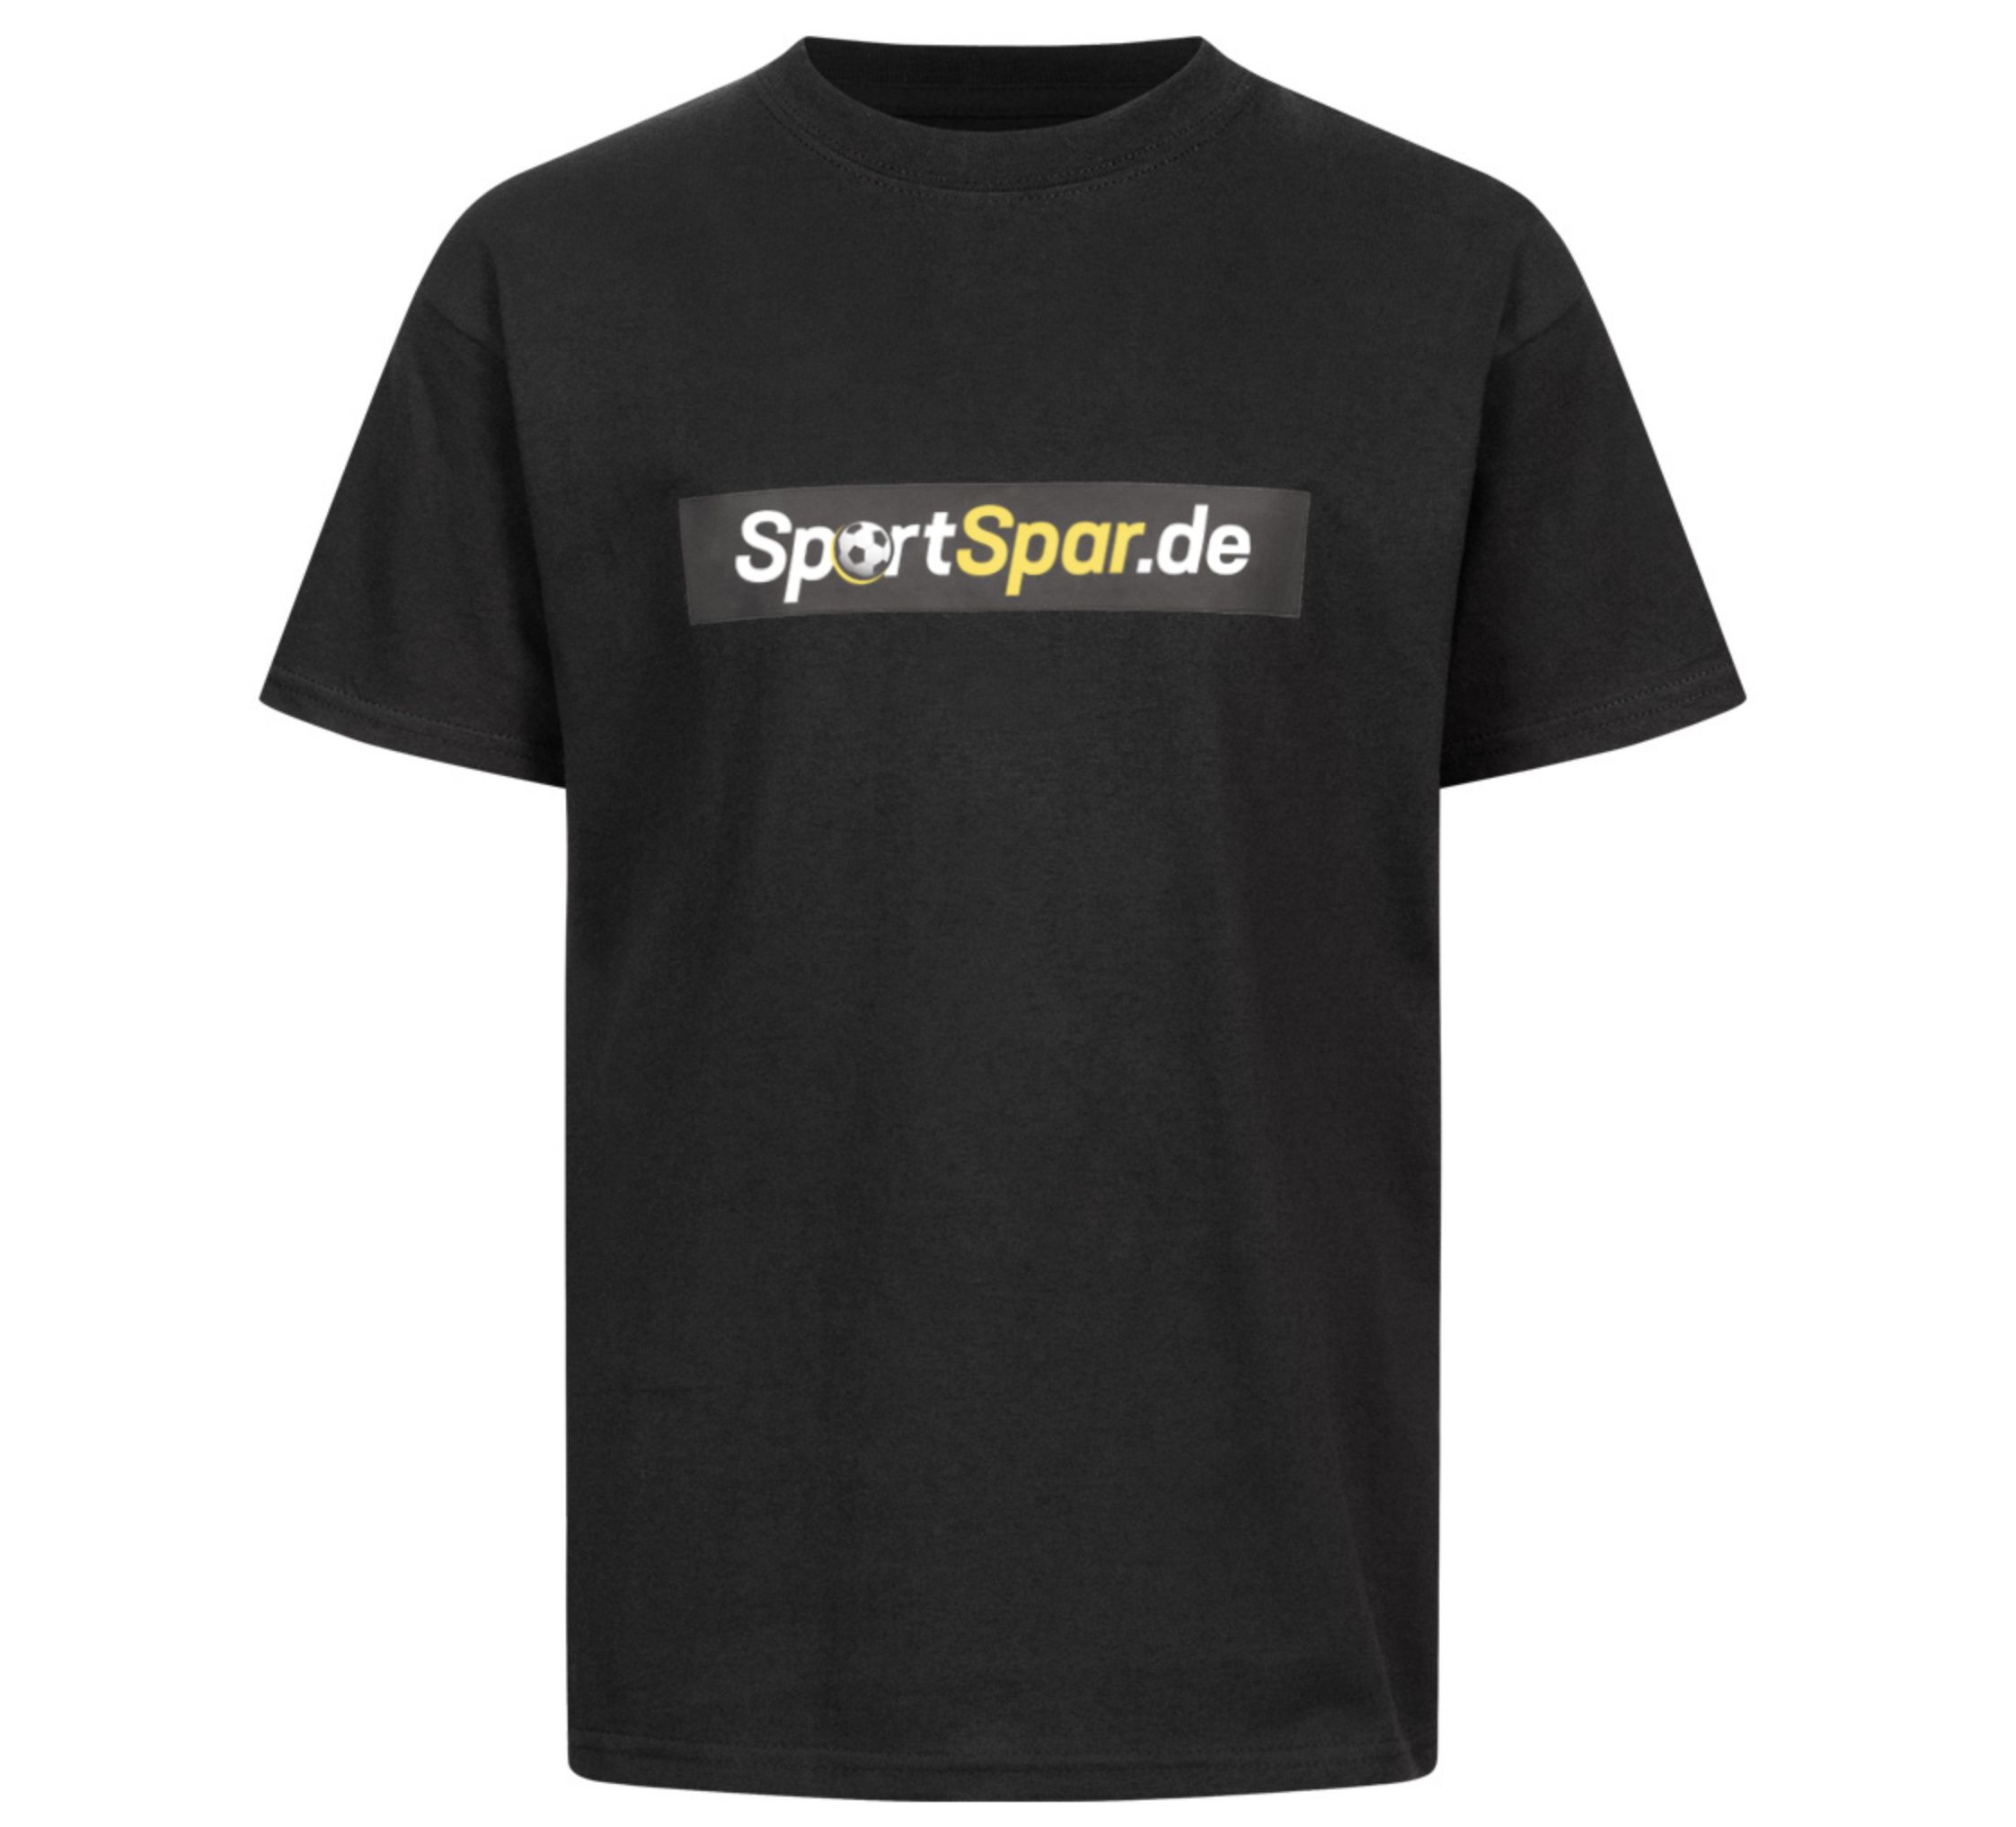 Hanes x Sportspar.de Baumwollinho Kinder T Shirt für je nur 0,22€ + VSK